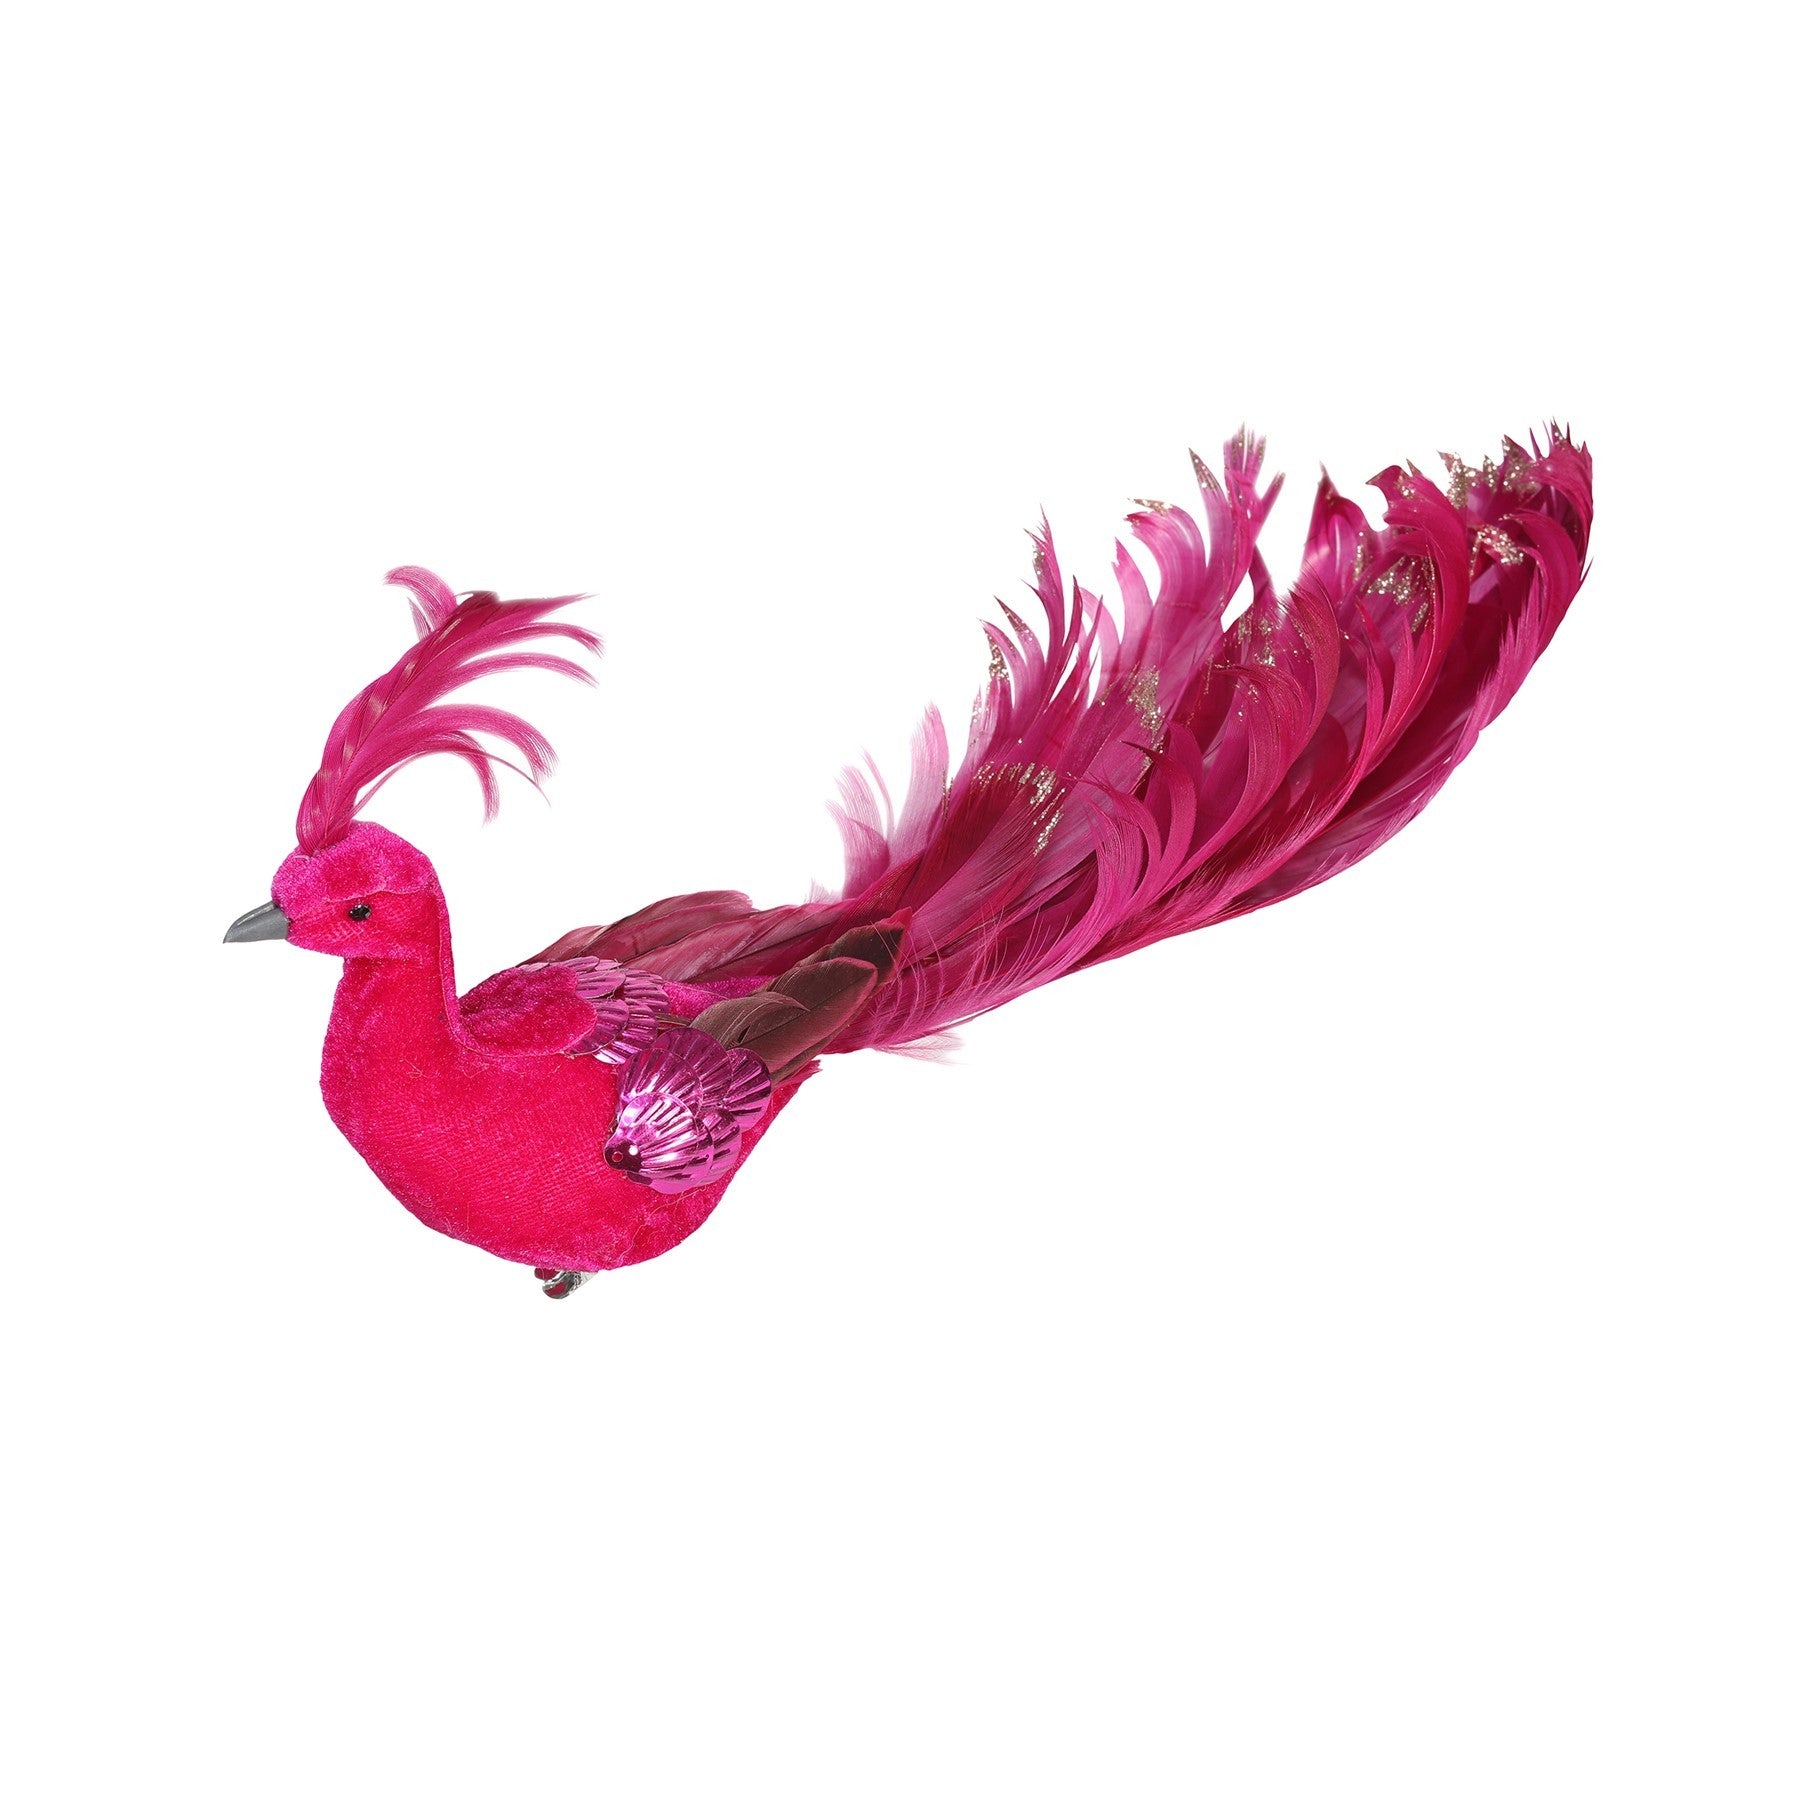 View Hot Pink Velvet Peacock 26cm information